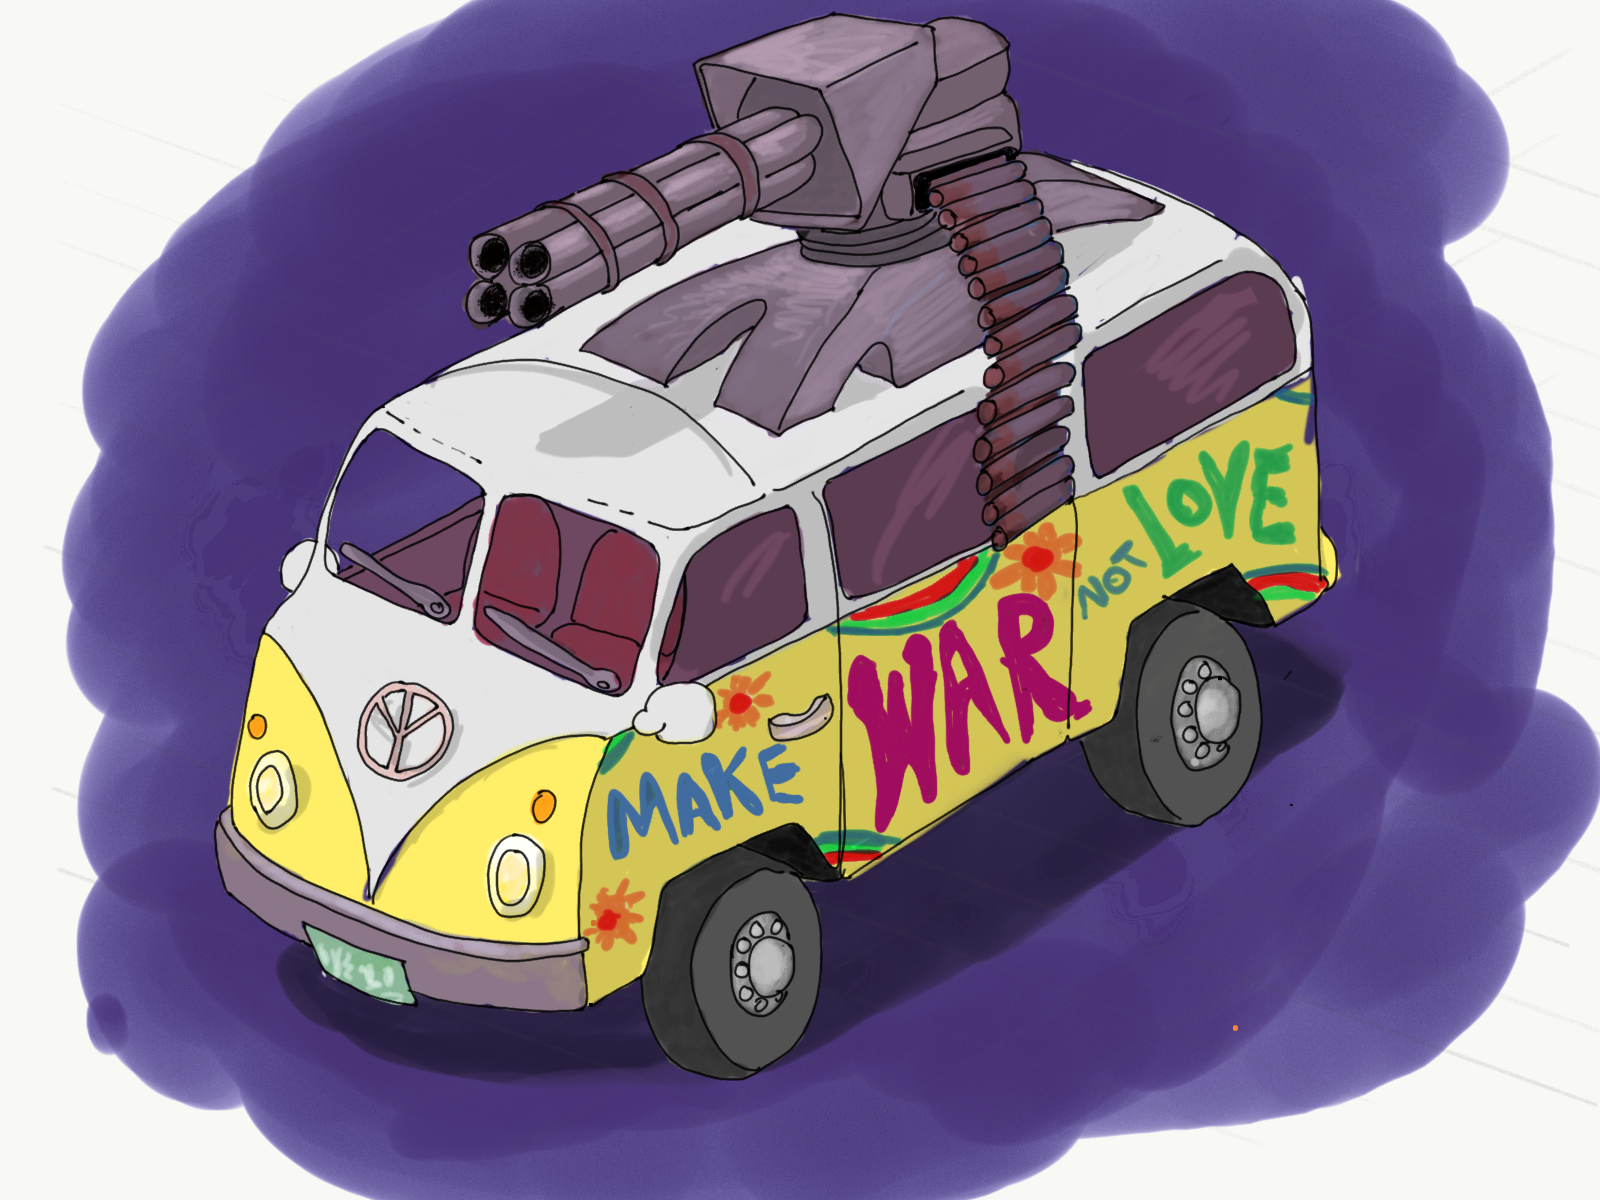 “Influence warfare now not like” offended hippy van (popular art)